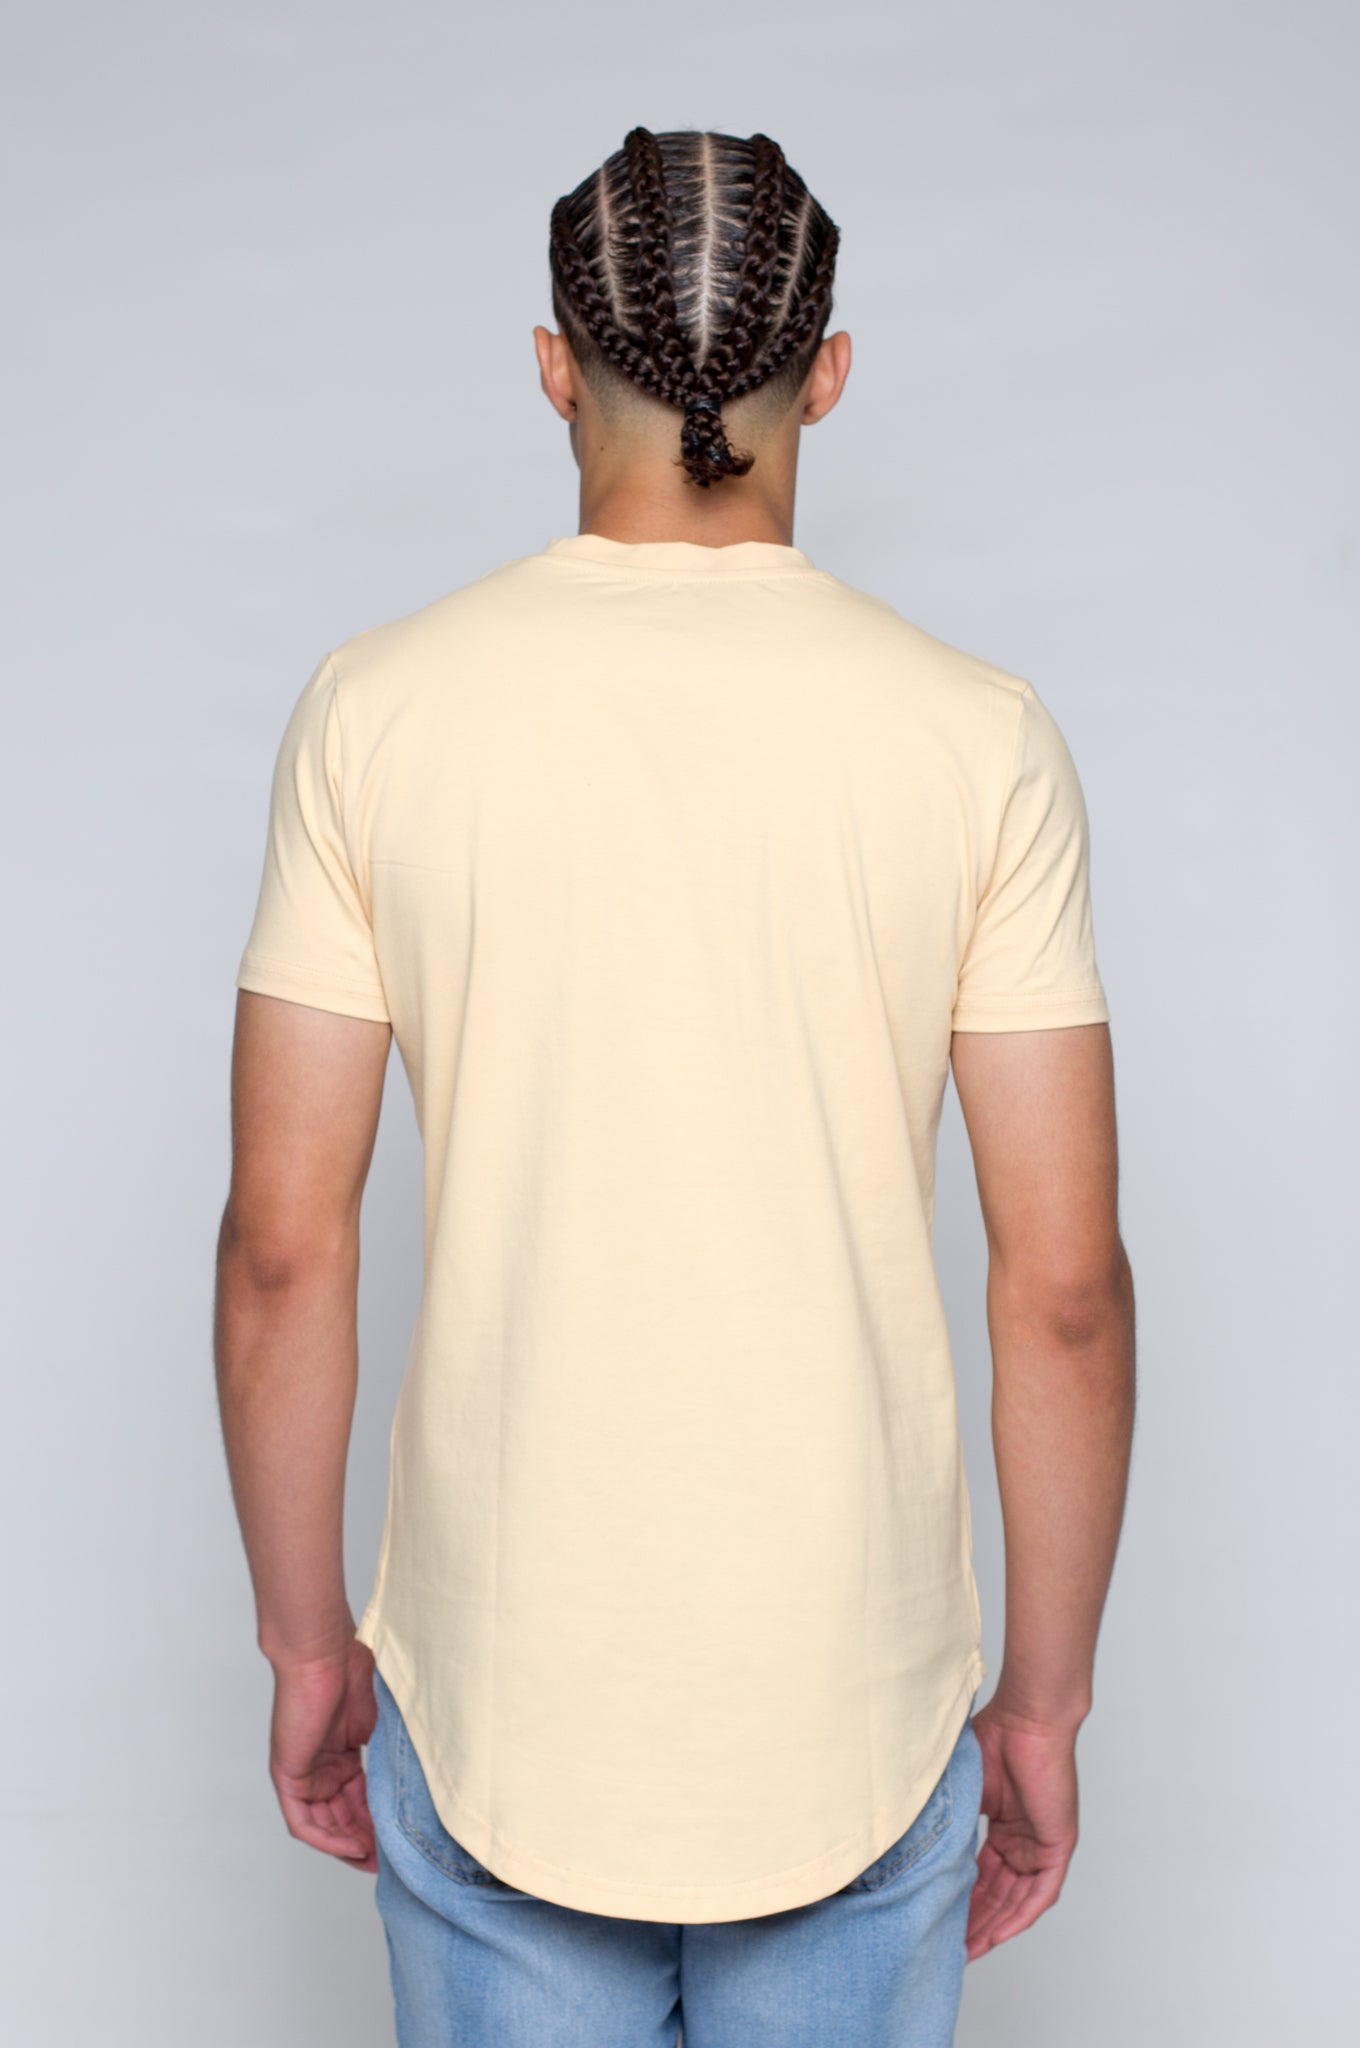 Scallop-Cut T-Shirt in Butterscotch | Poor Little Rich Boy Clothing